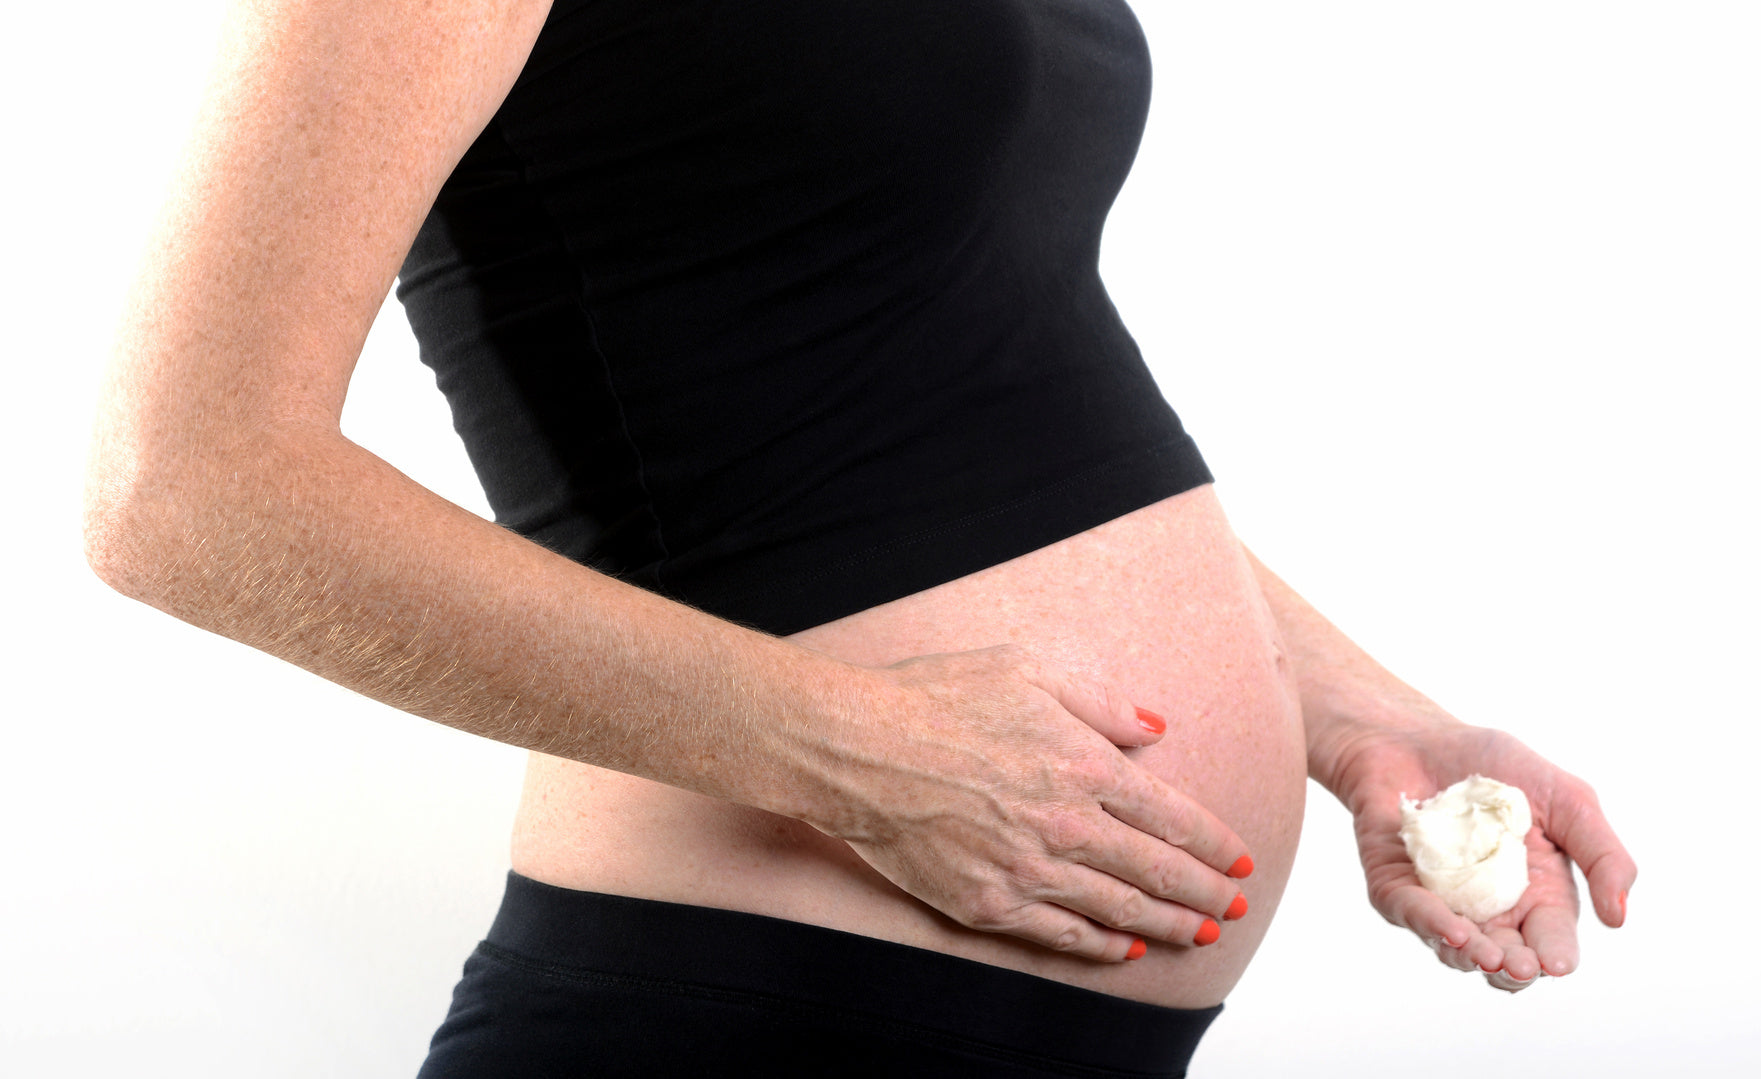 PREGNANCY AND THE STRETCH MARK DEBATE